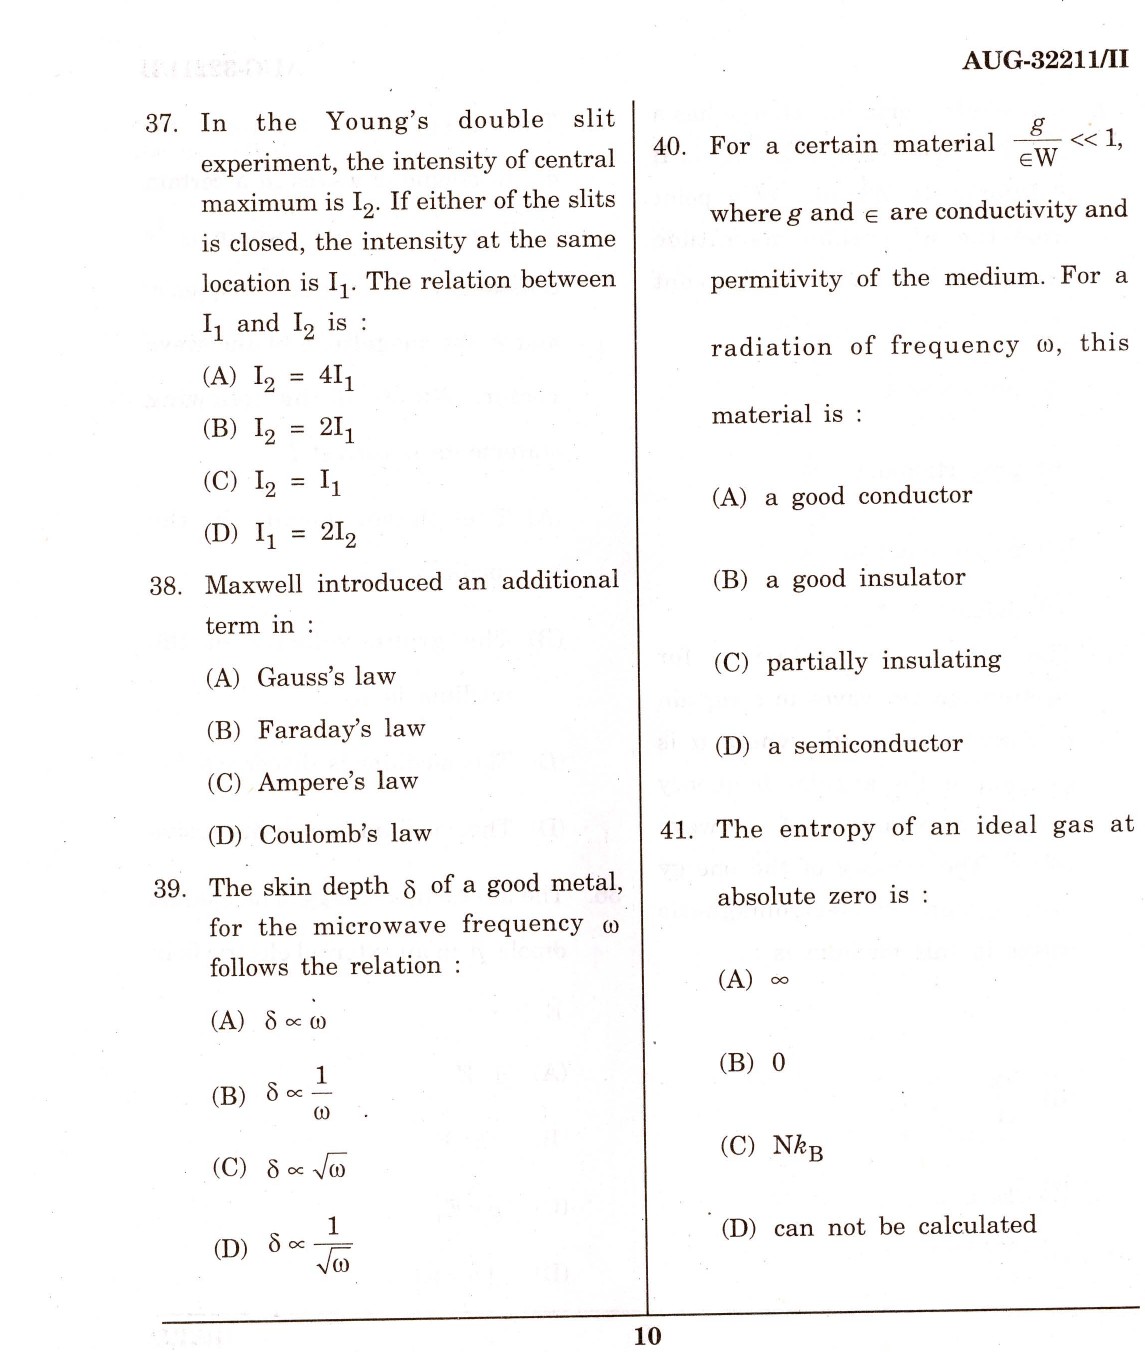 Maharashtra SET Physics Question Paper II August 2011 10